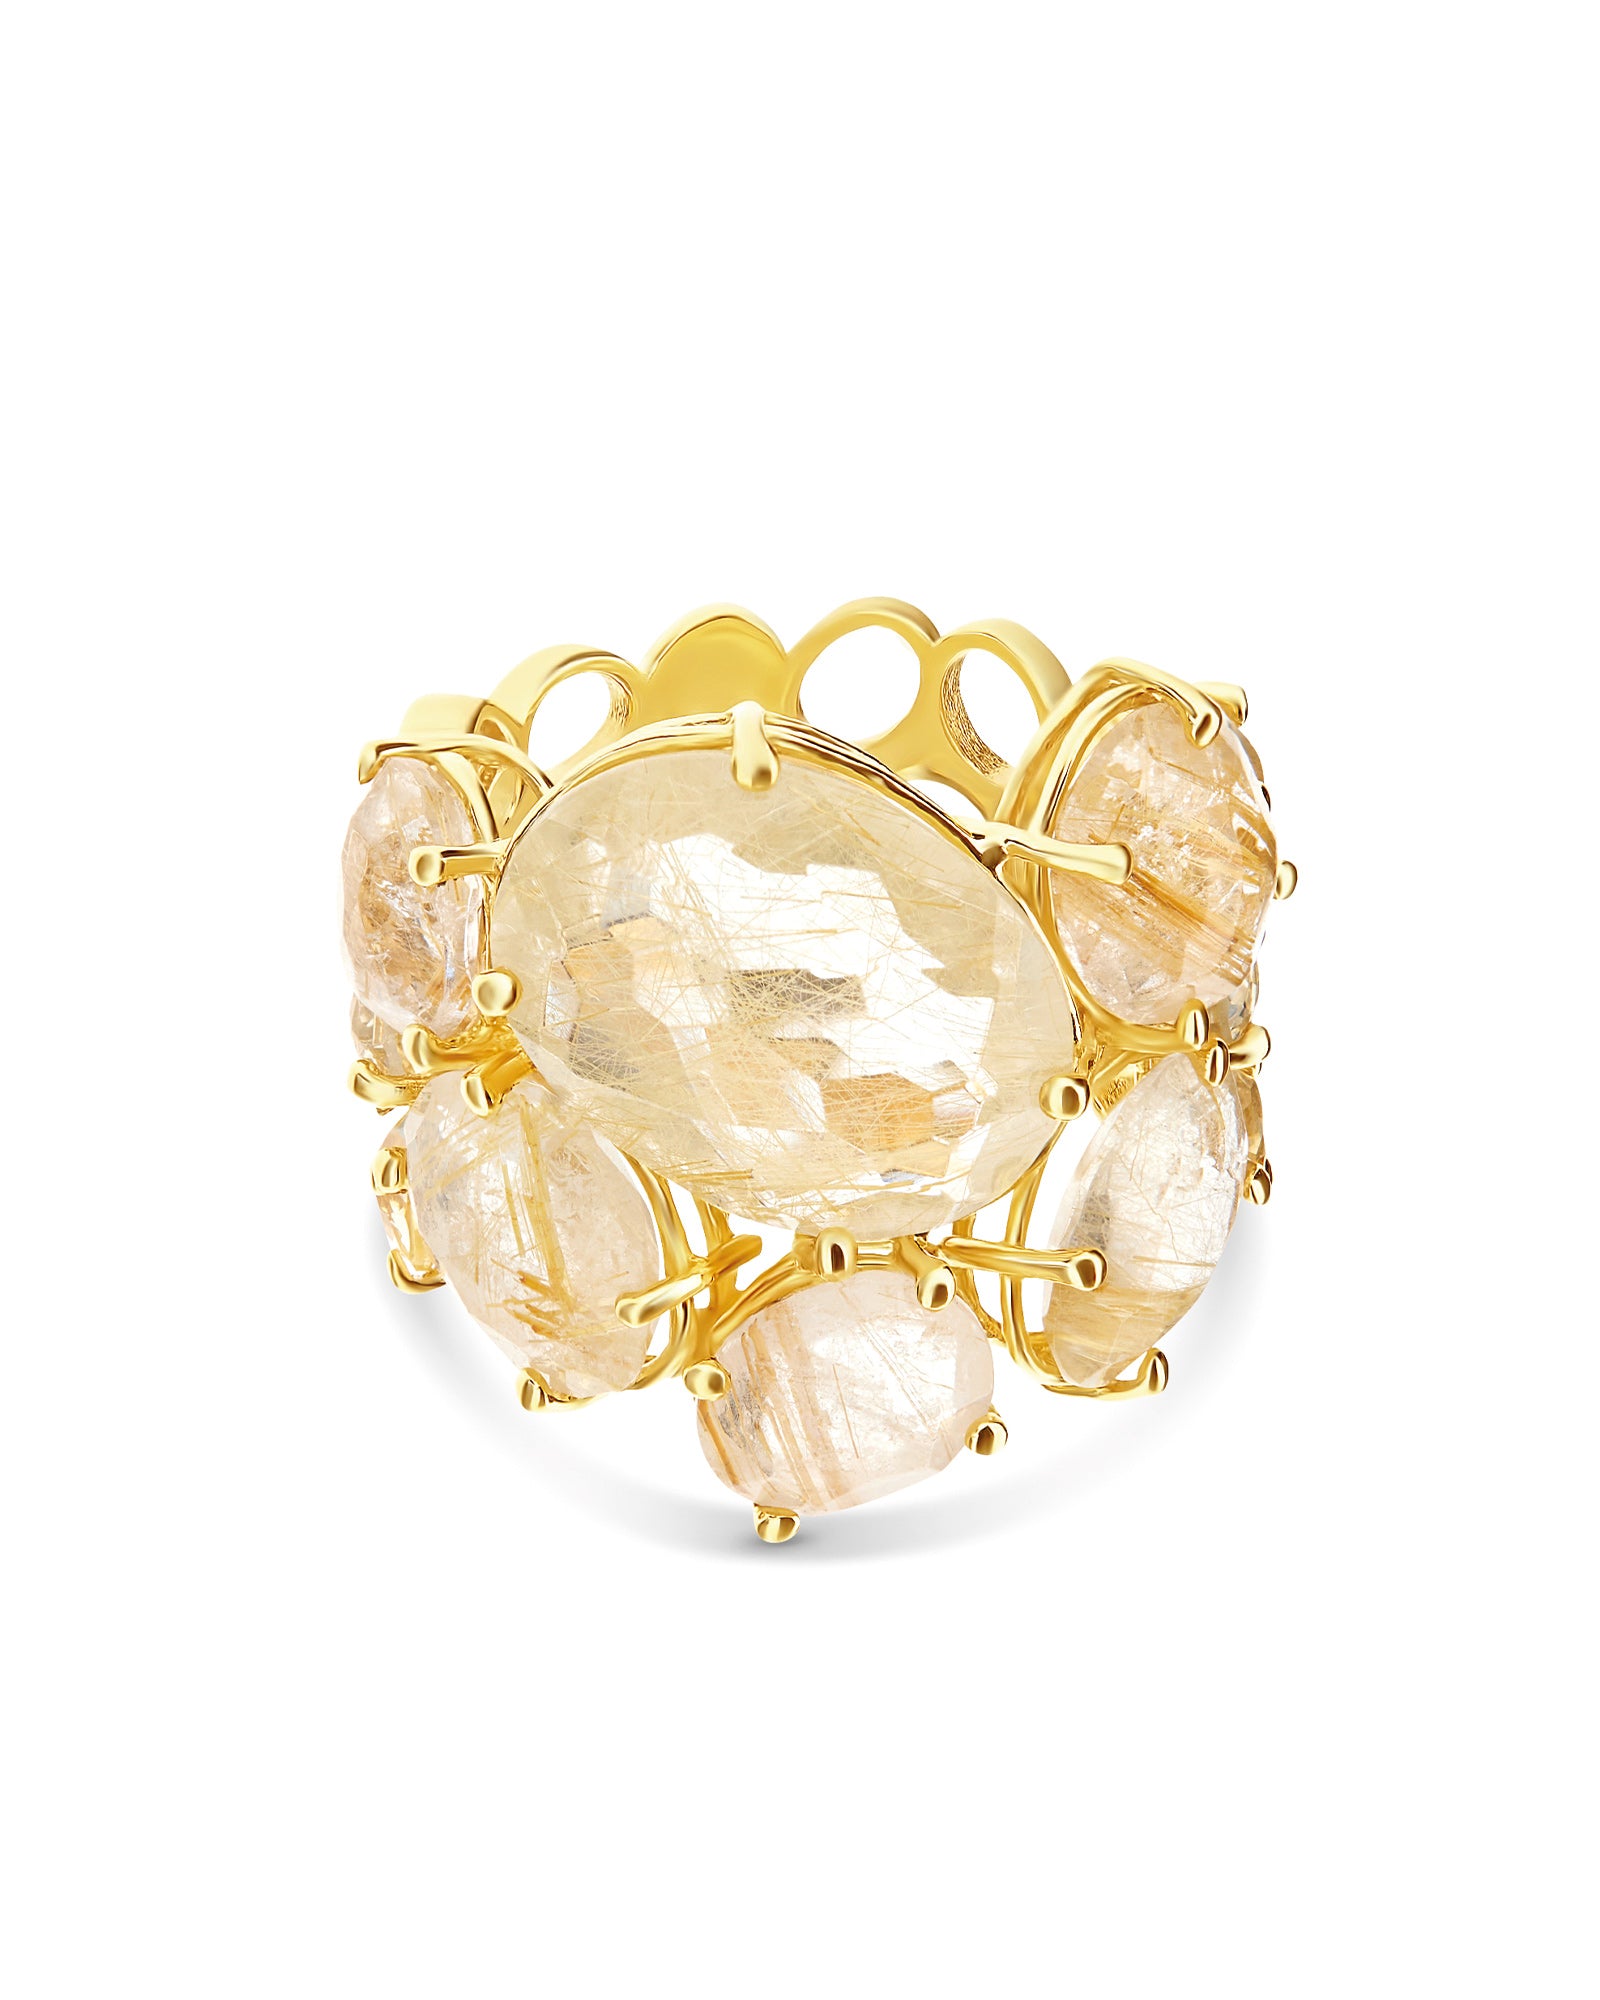 "Ipanema" Gold and Yellow Rutilated quartz band ring